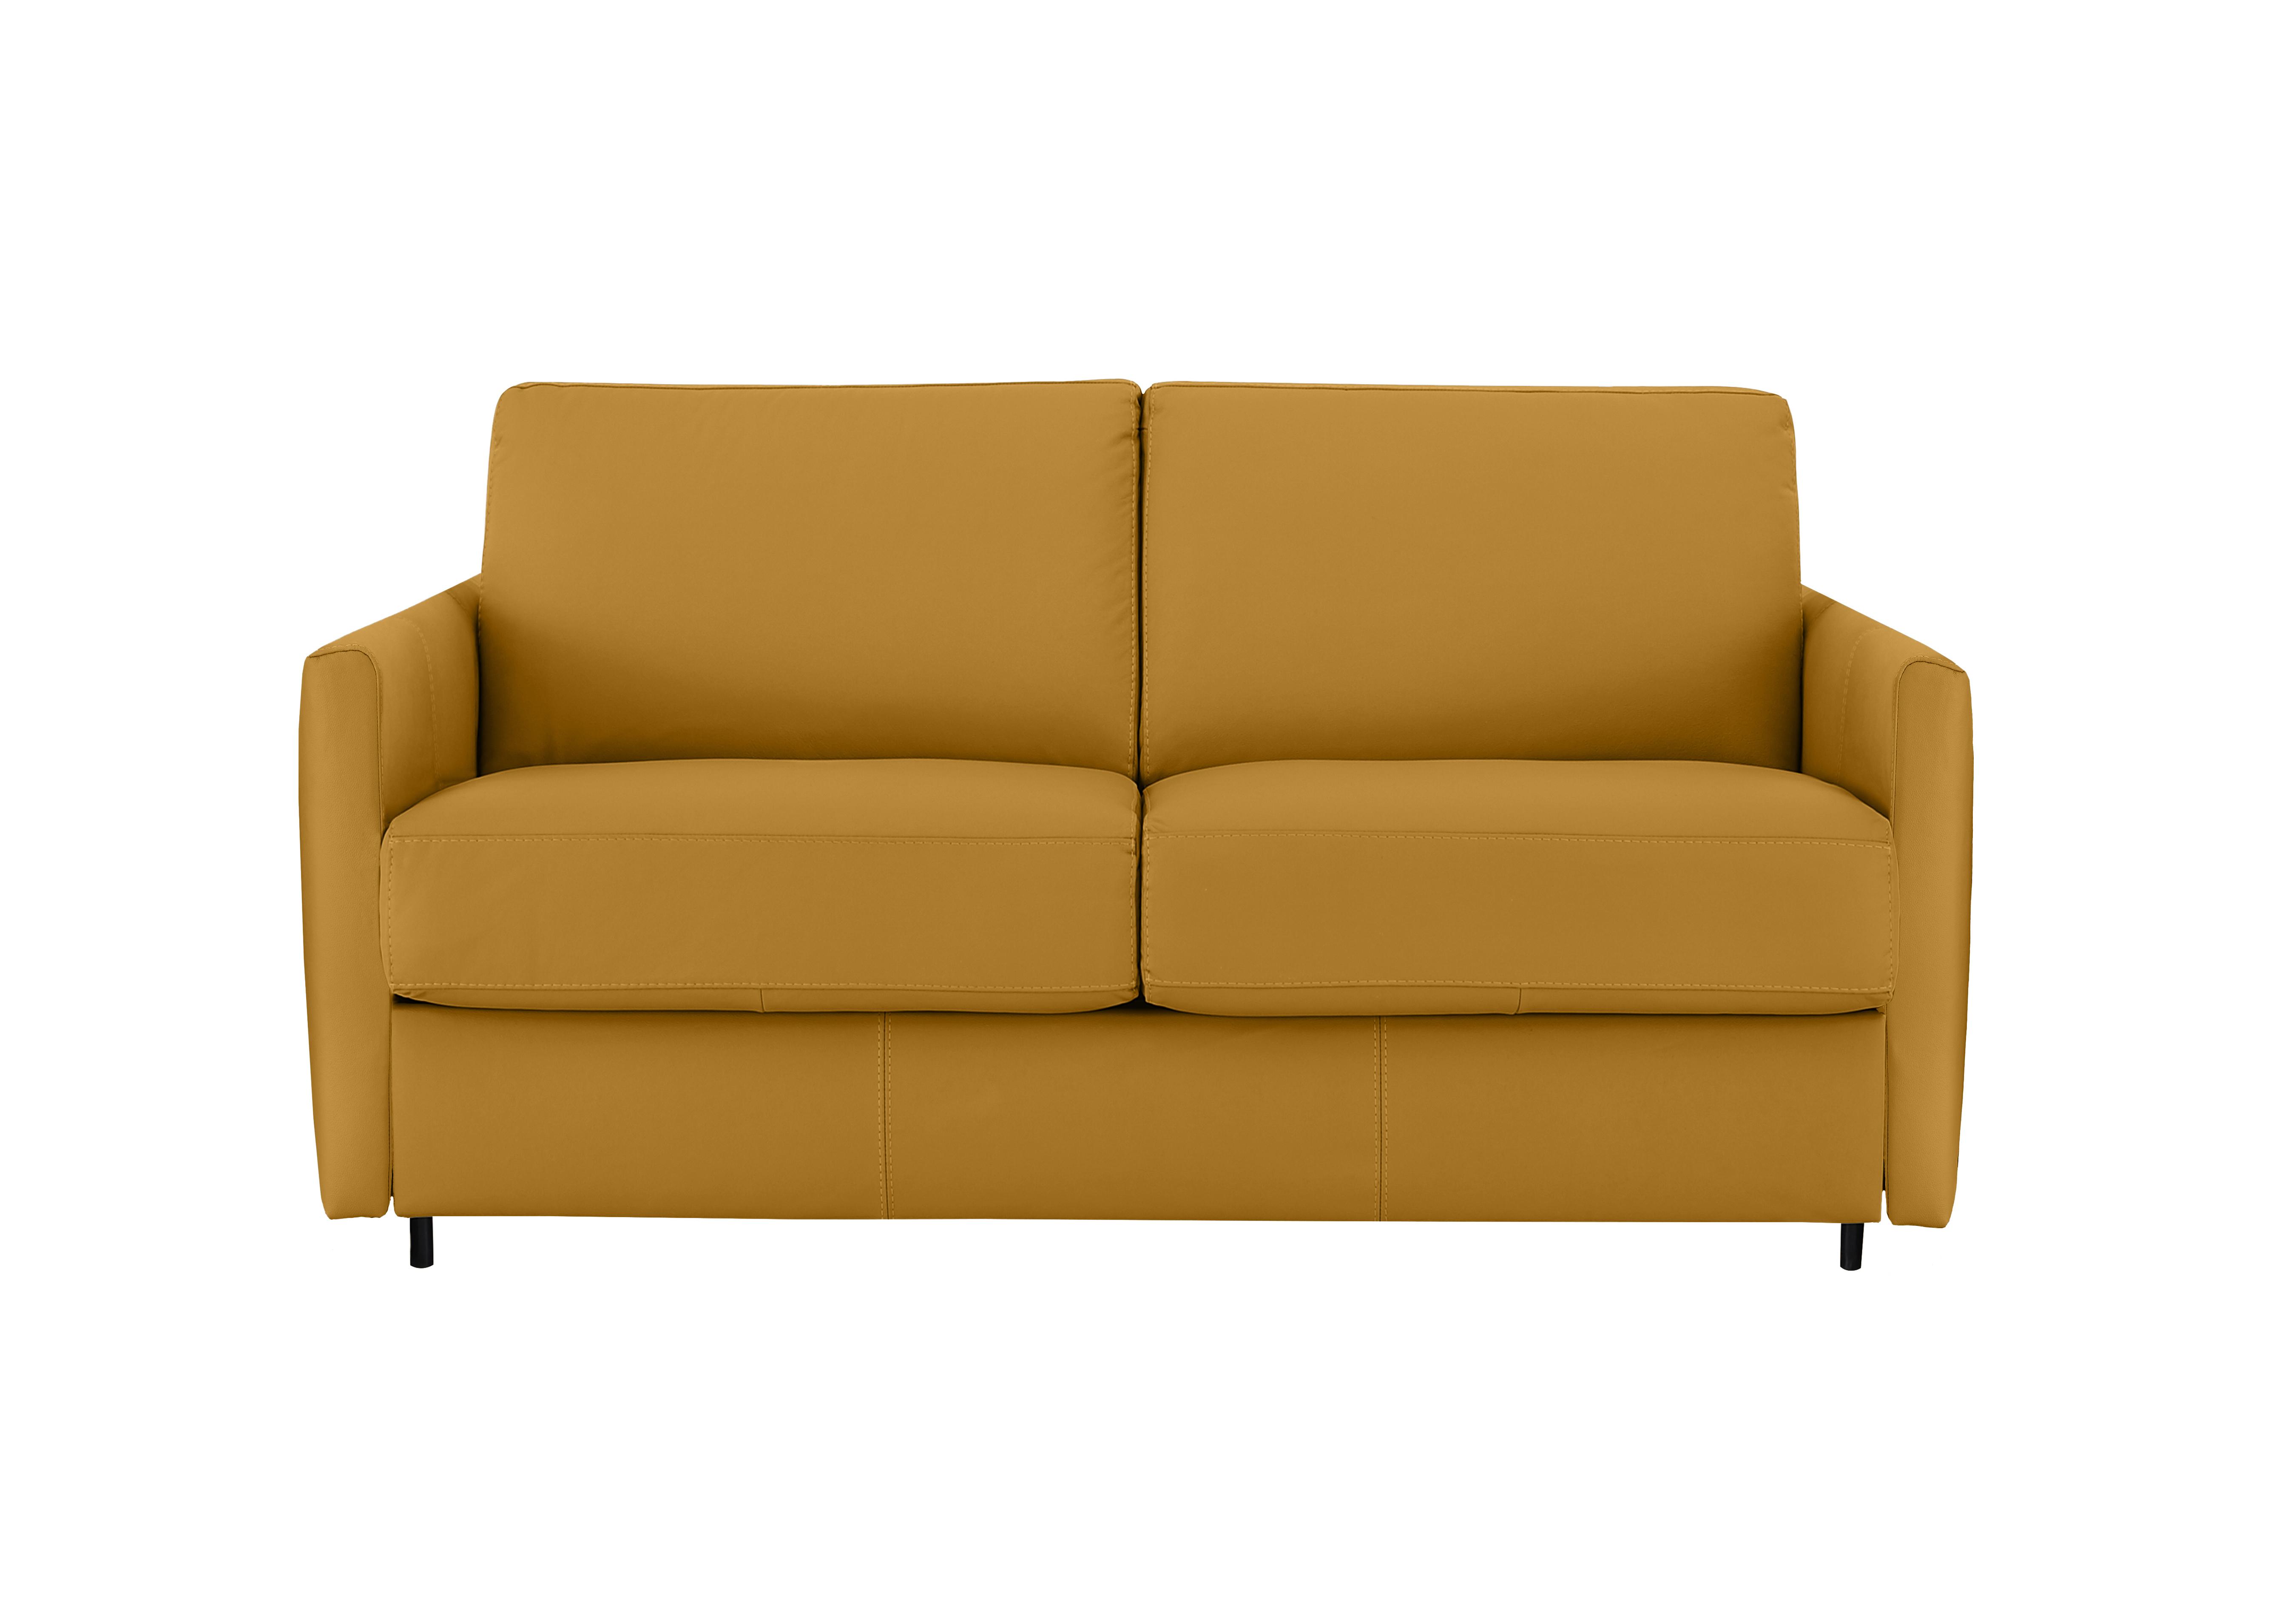 Alcova 2 Seater Leather Sofa Bed with Slim Arms in Torello Senape 355 on Furniture Village